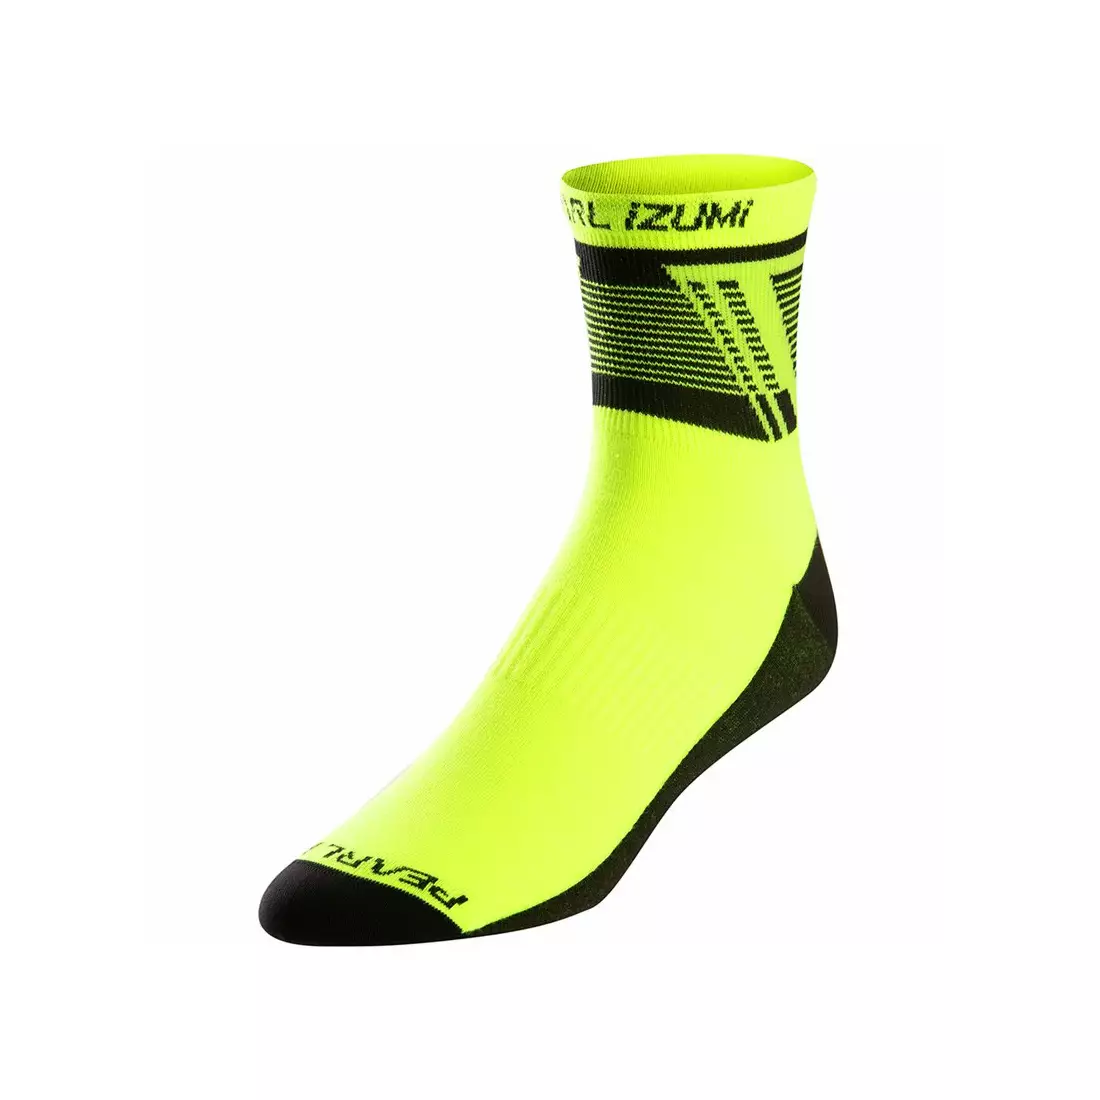 PEARL IZUMI men's sports socks Elite 14151405-5MA Scream Yellow